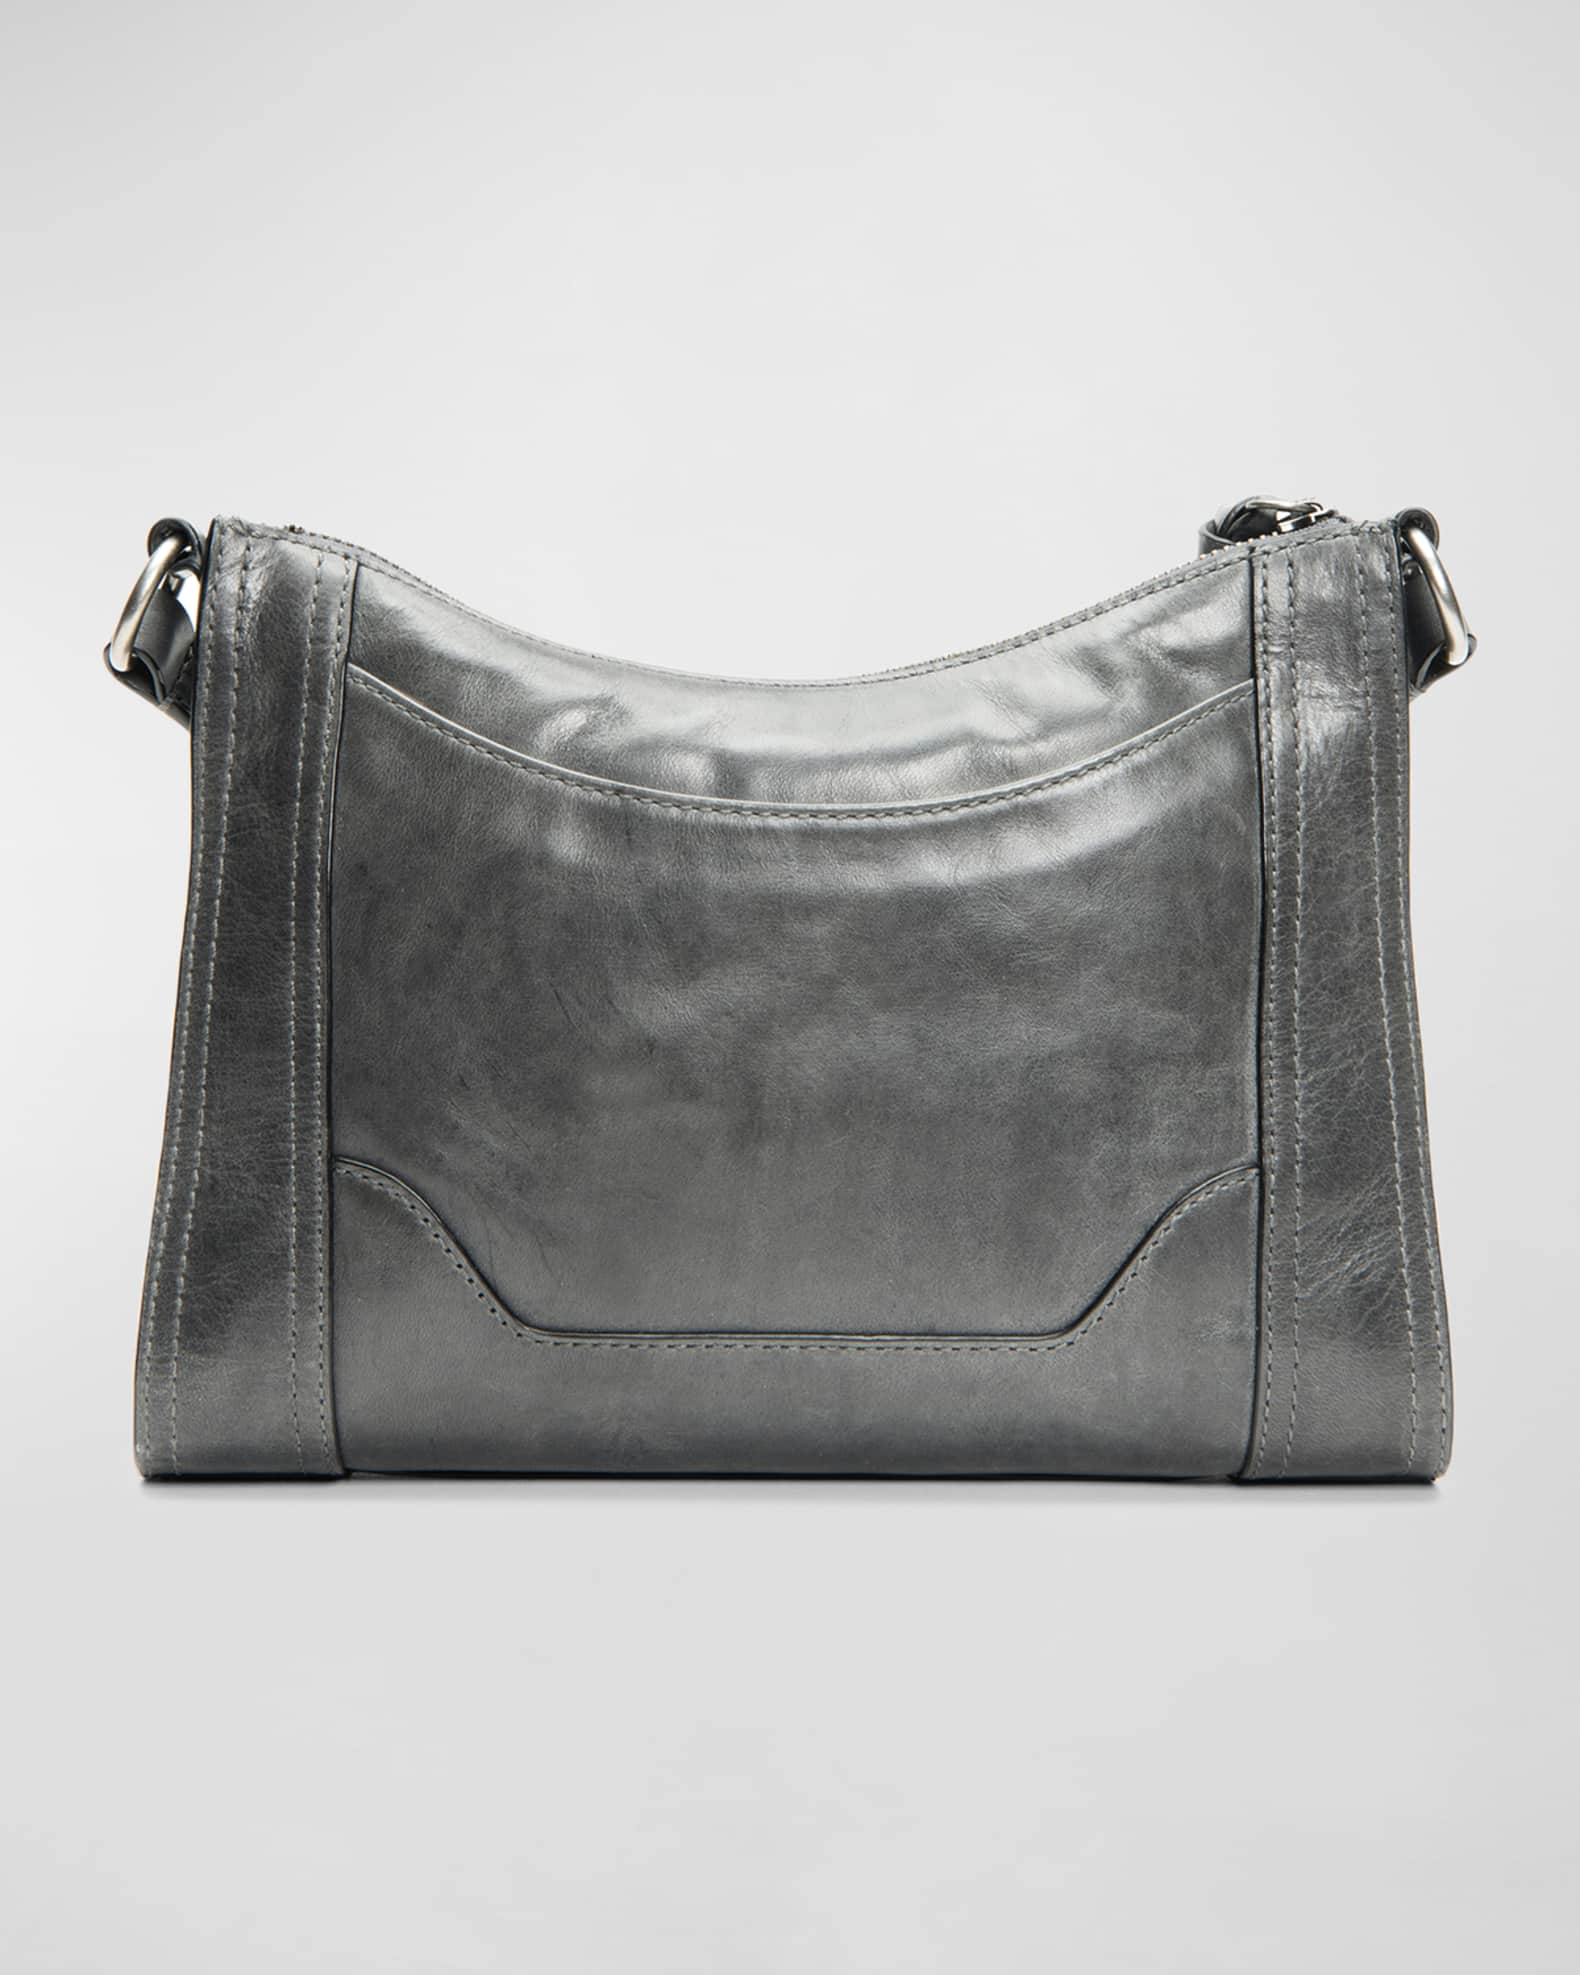 Buy the Frye Melissa Hobo Shoulder Bag Gray Leather